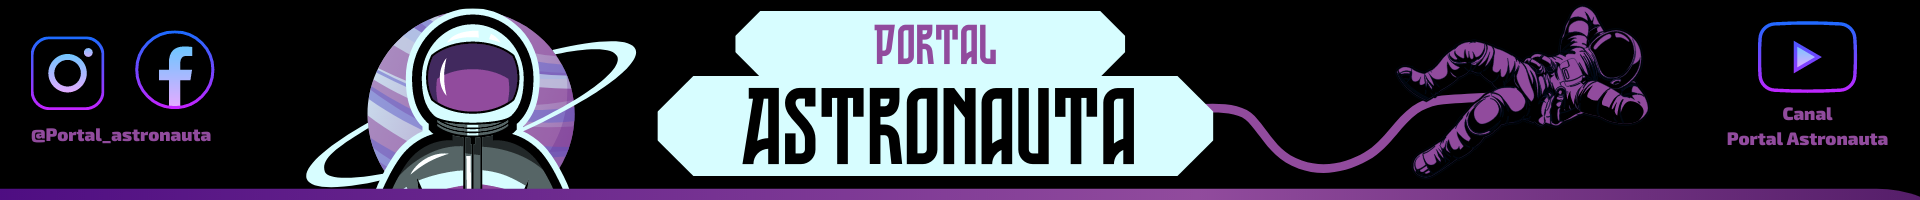 Portal Astronauta